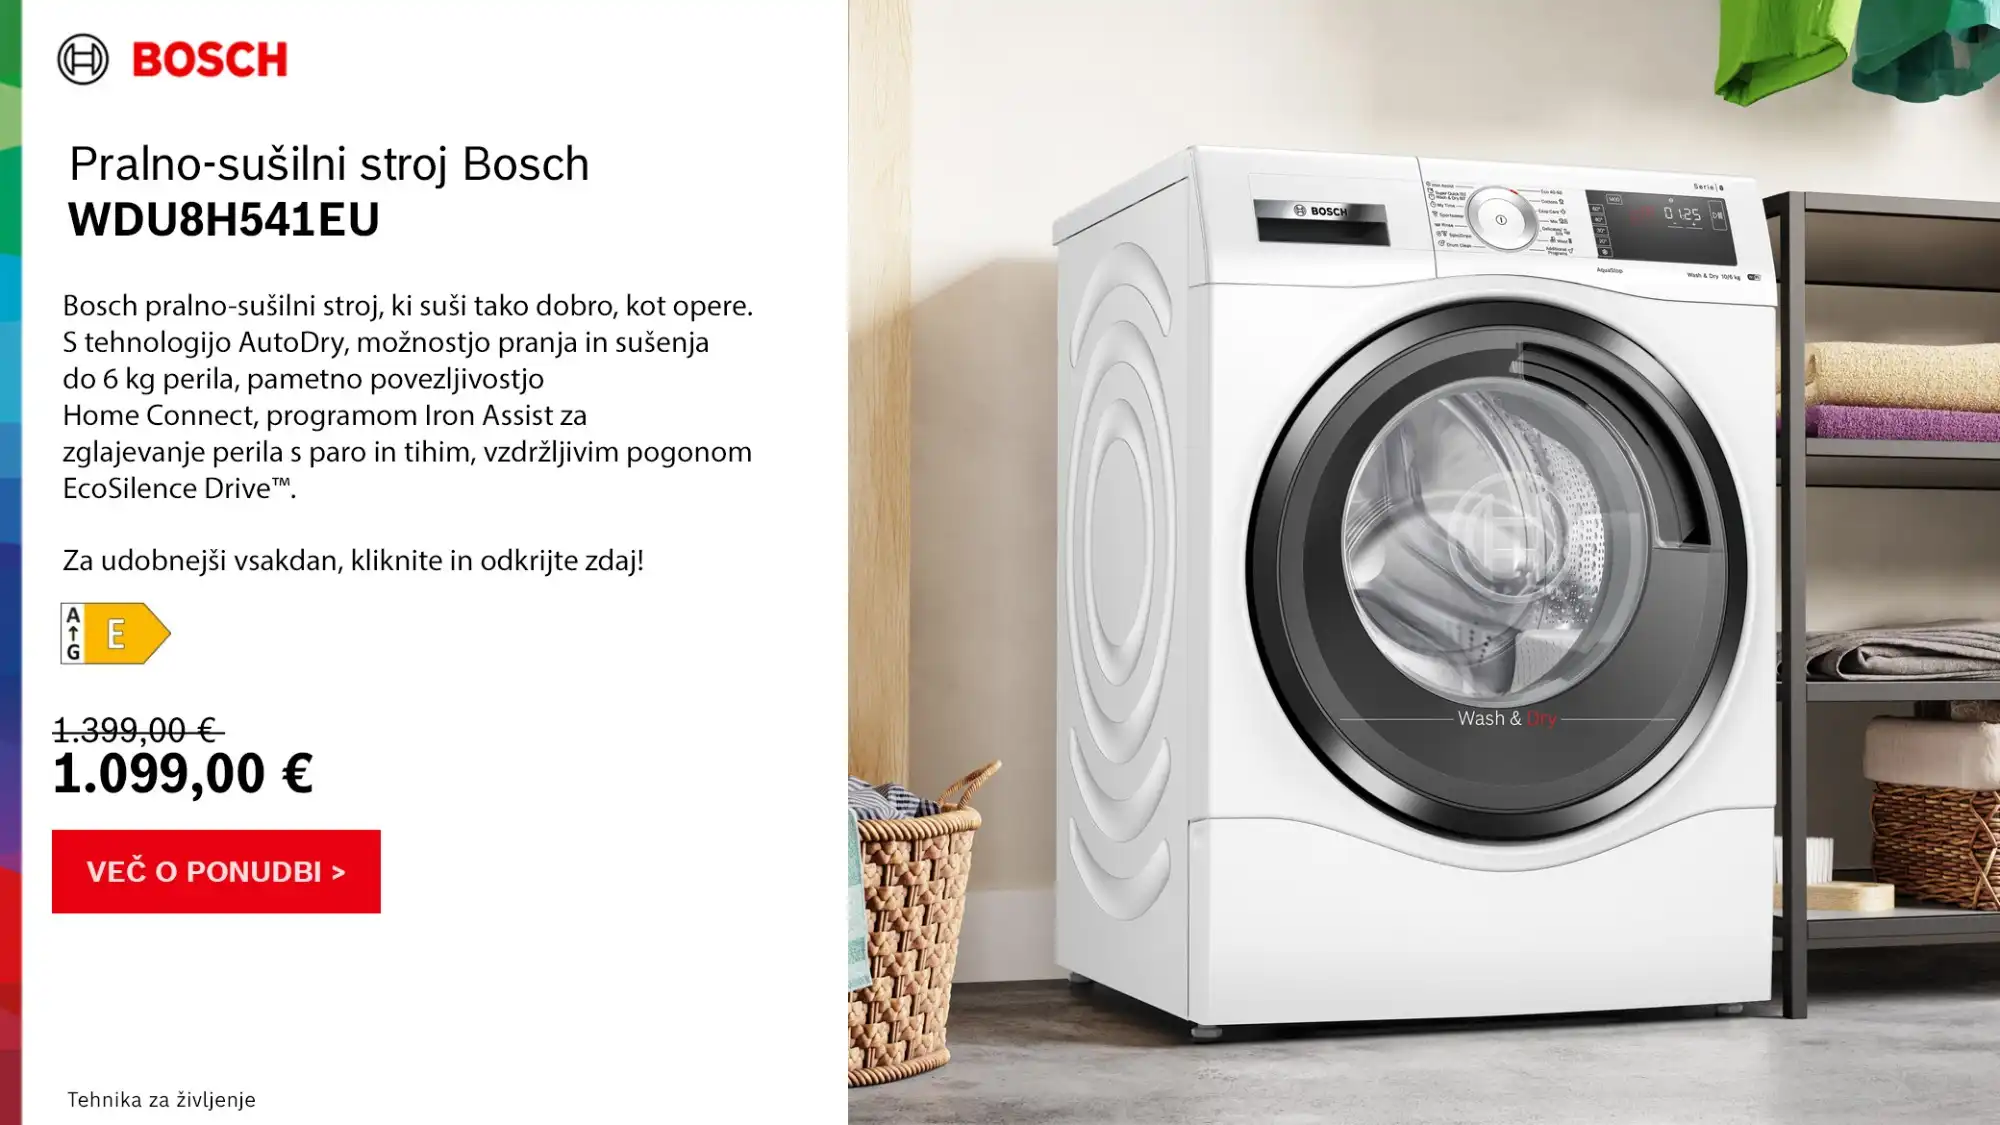 Bosch - pralno-sušilni stroj